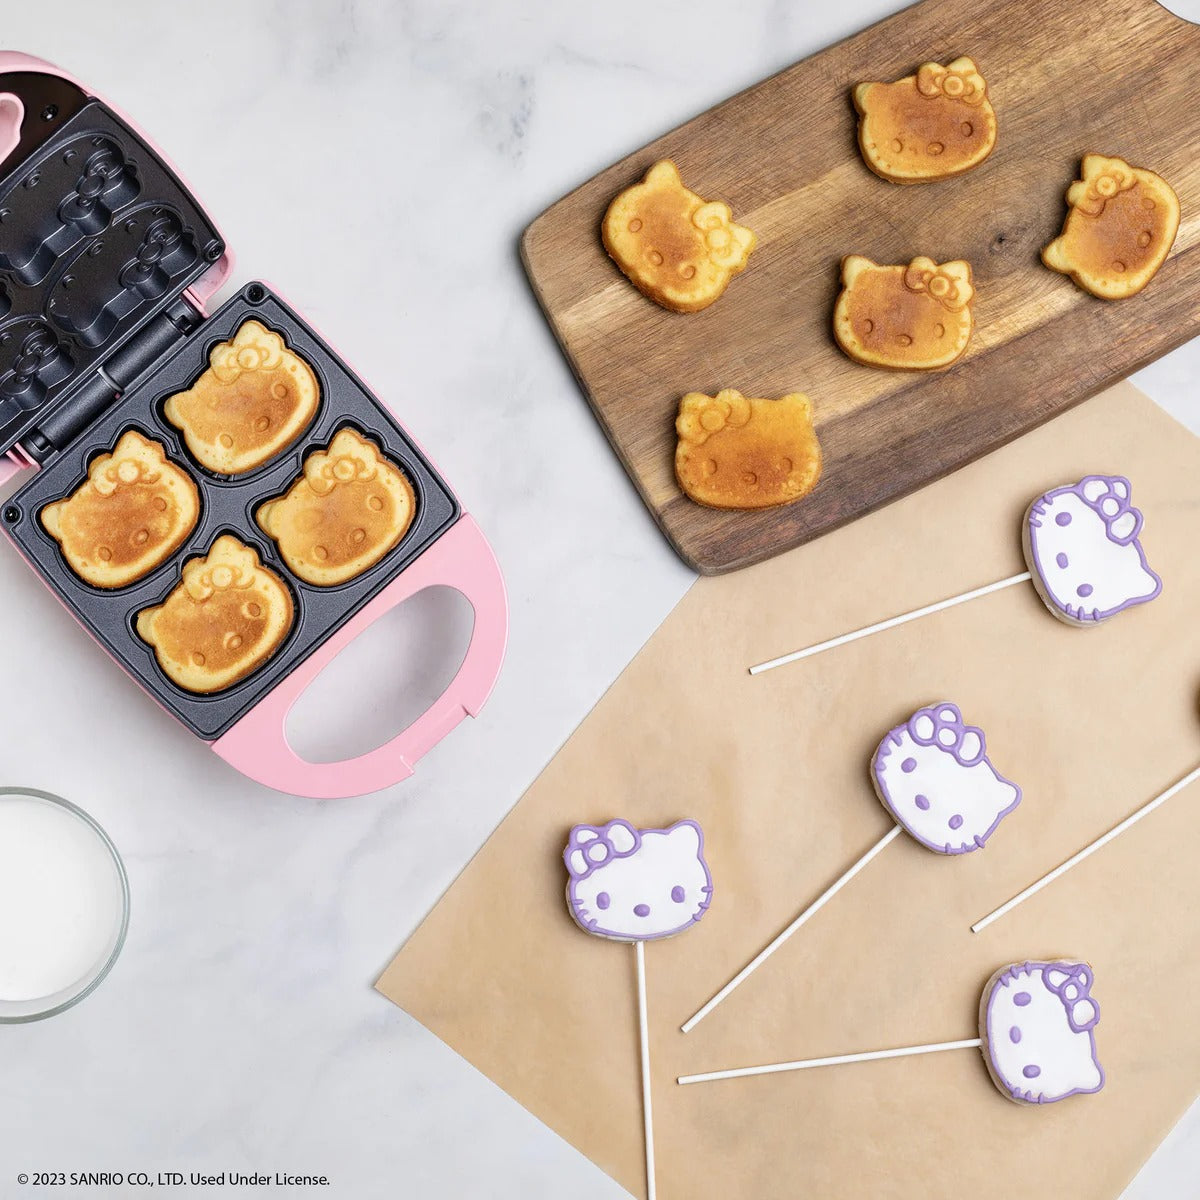 Amazon.com: Aoruru Cake Pop Maker Cupcake Maker for Kids: Home & Kitchen